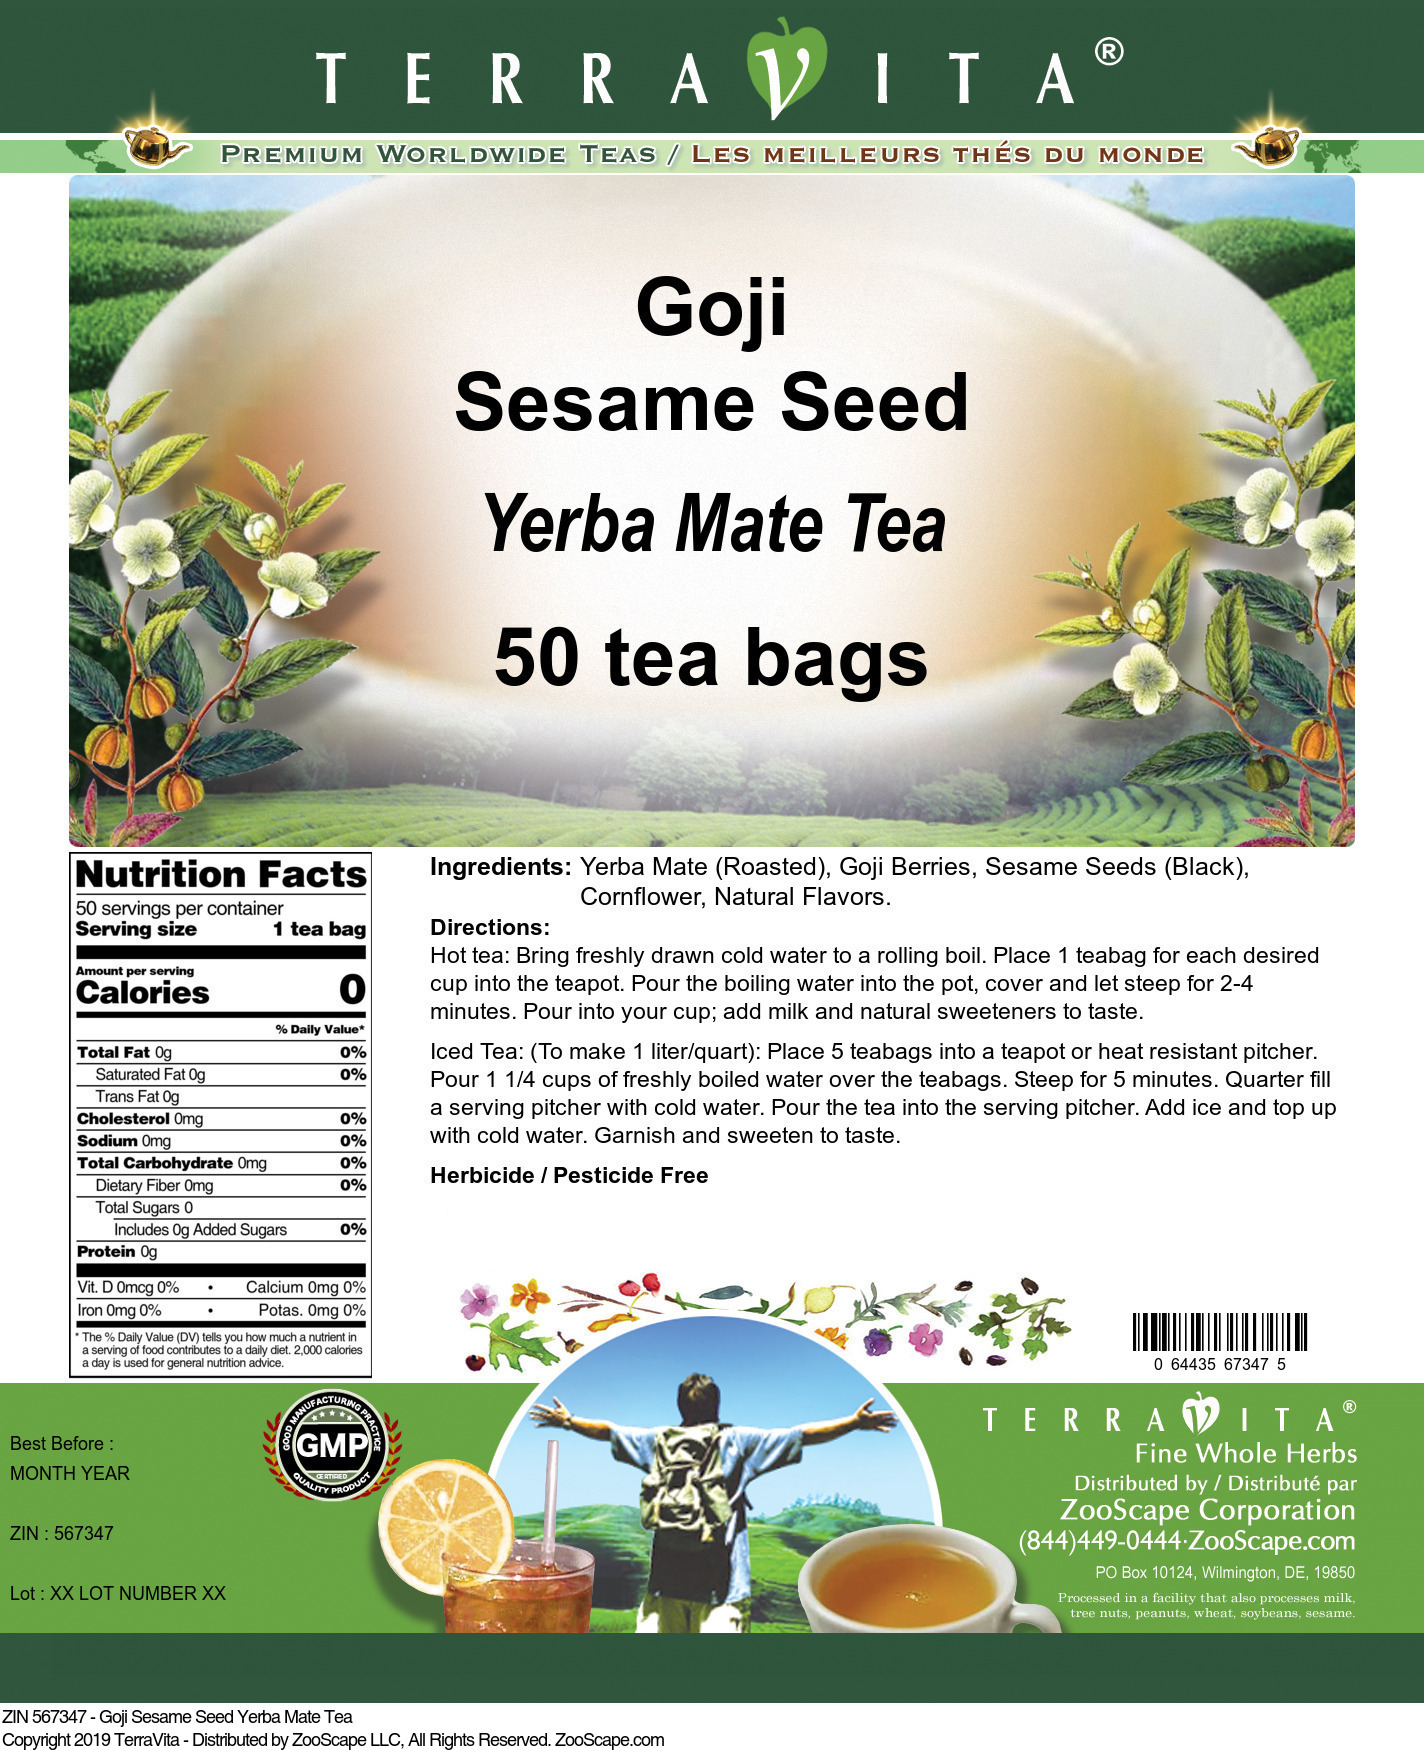 Goji Sesame Seed Yerba Mate Tea - Label